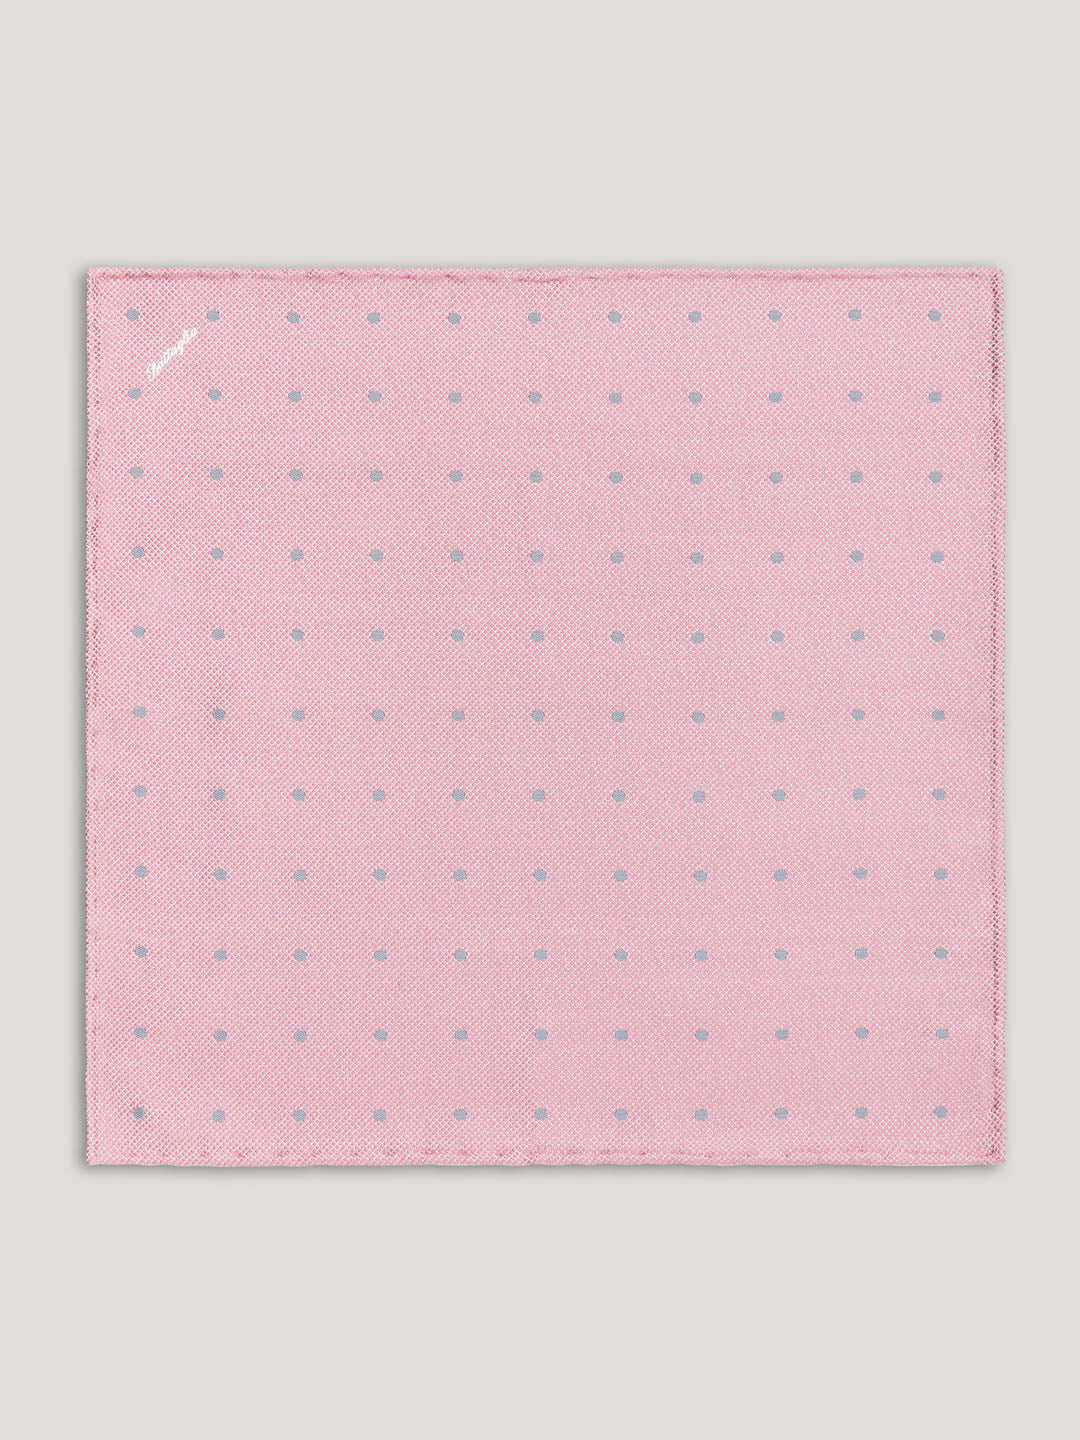 Baby pink handkerchief with grey polkadots. 